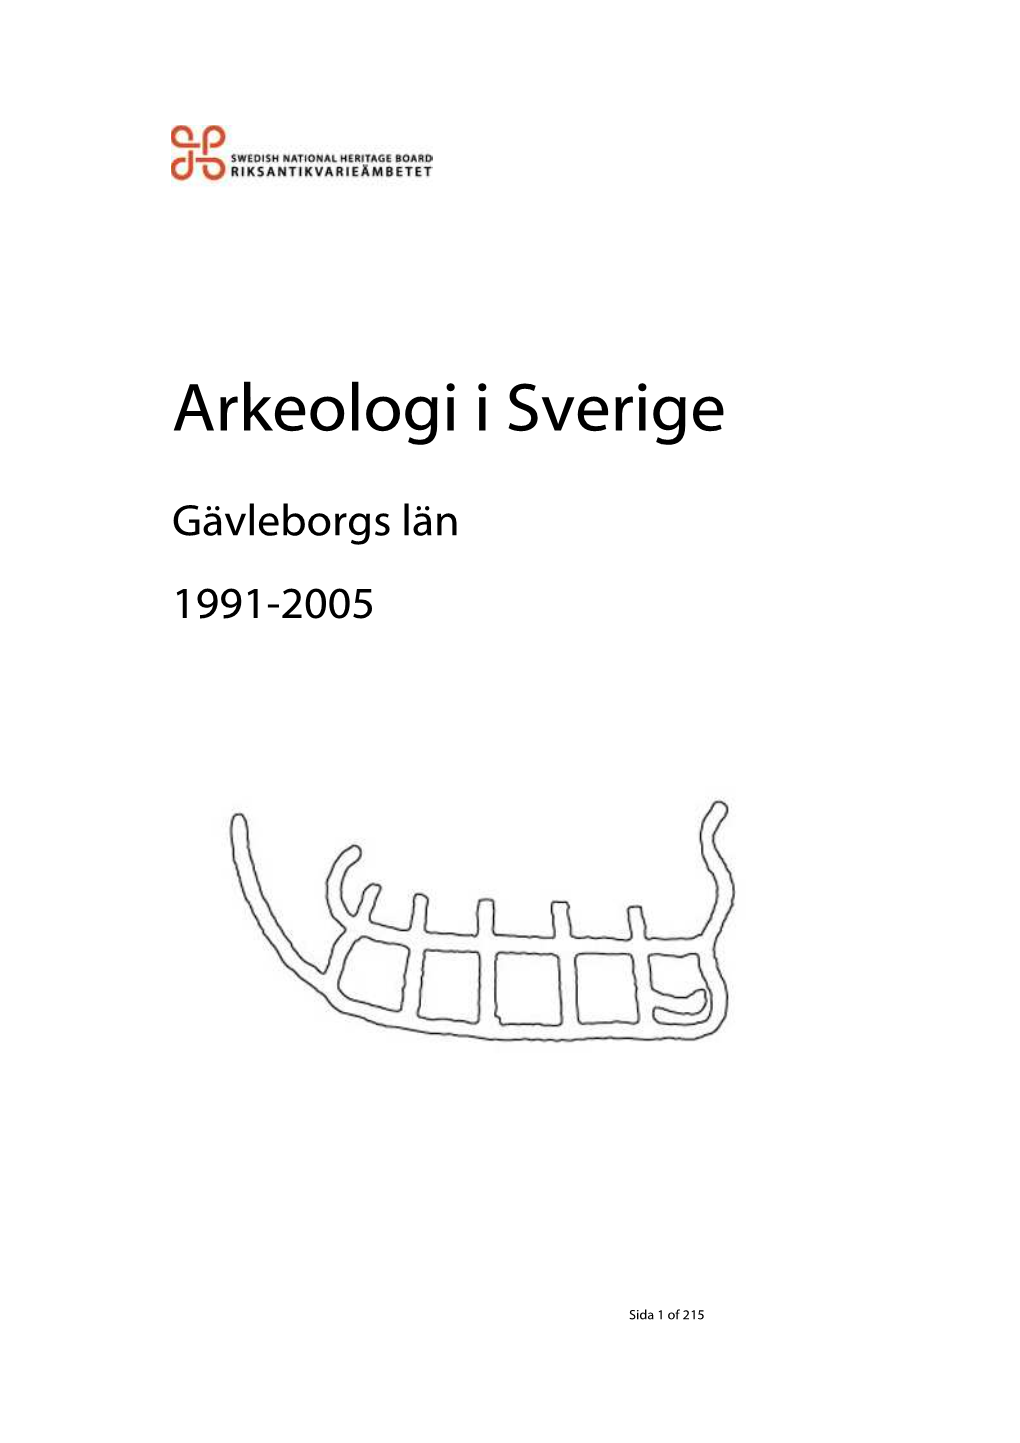 Arkeologi I Sverige Rapport Gavleborgs